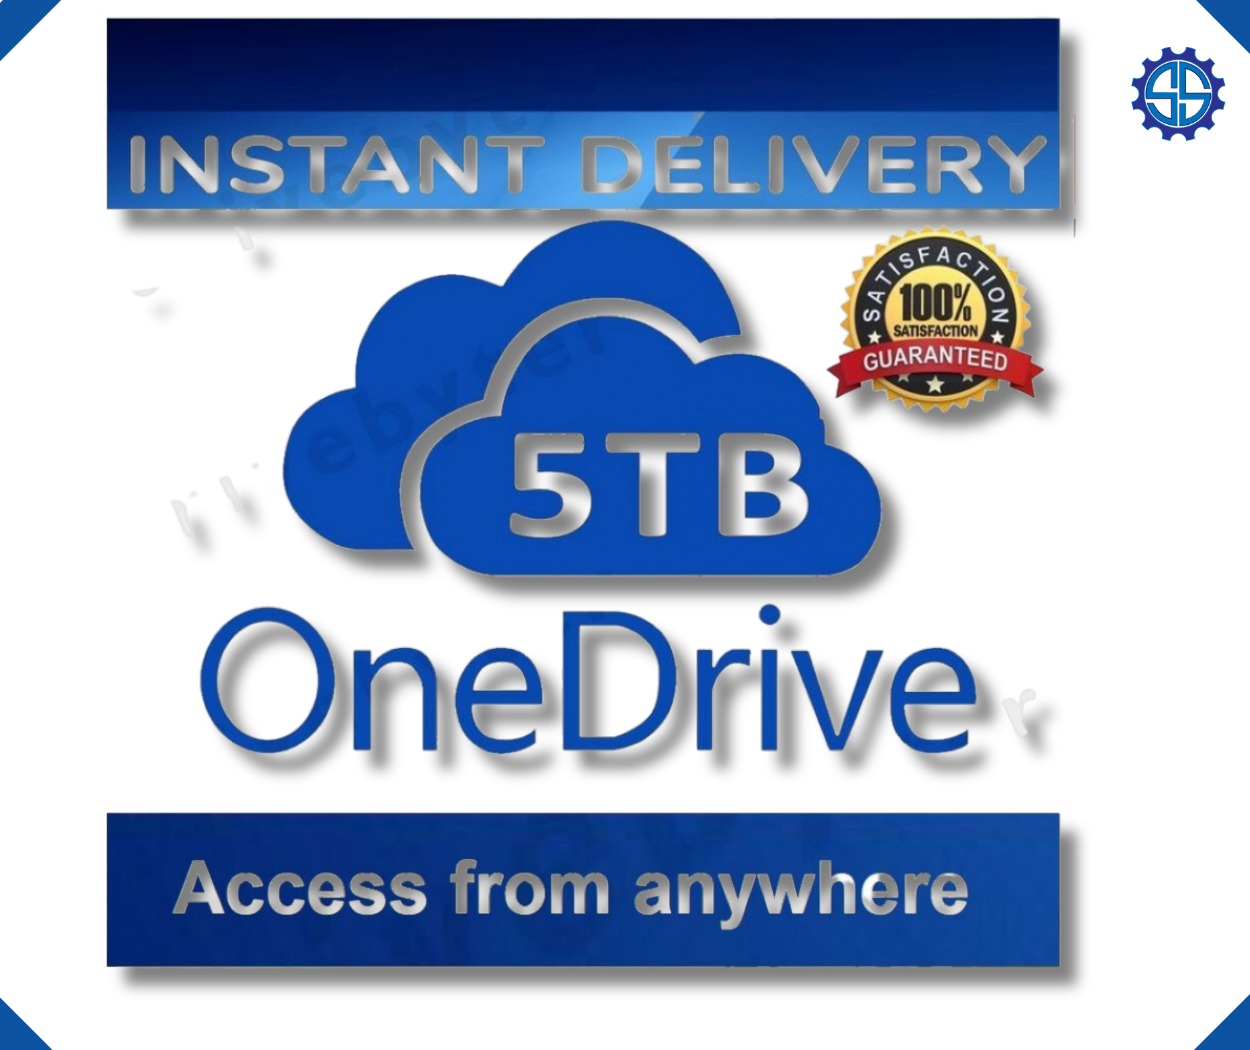 OneDrive 5TB Cloud Storage - مساحة تخزين سحابية بحجم 5 تيرابايت